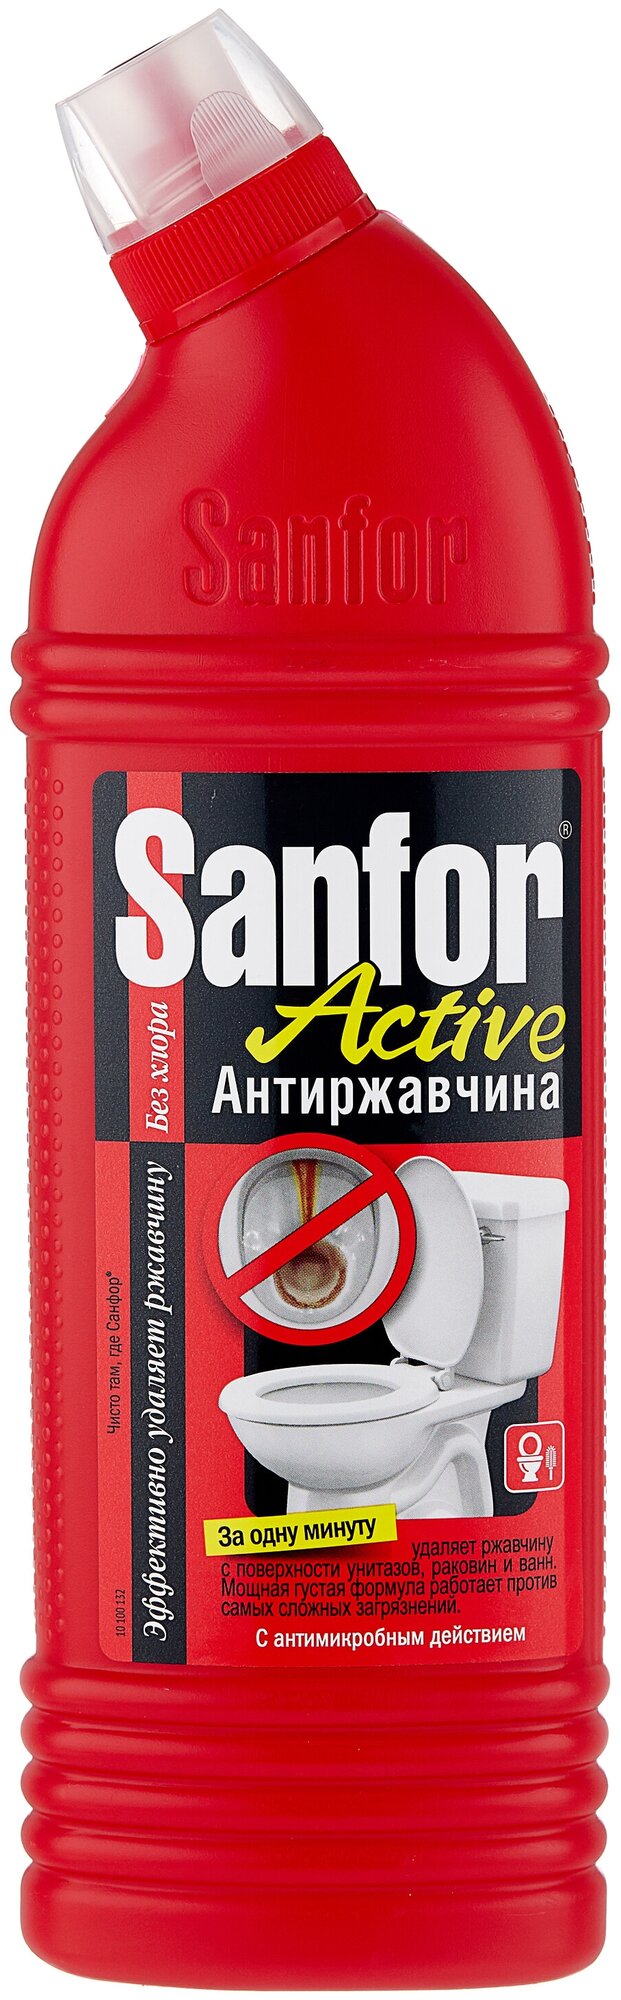 Sanfor гель для унитаза Аctive Антиржавчина, 0.75 л